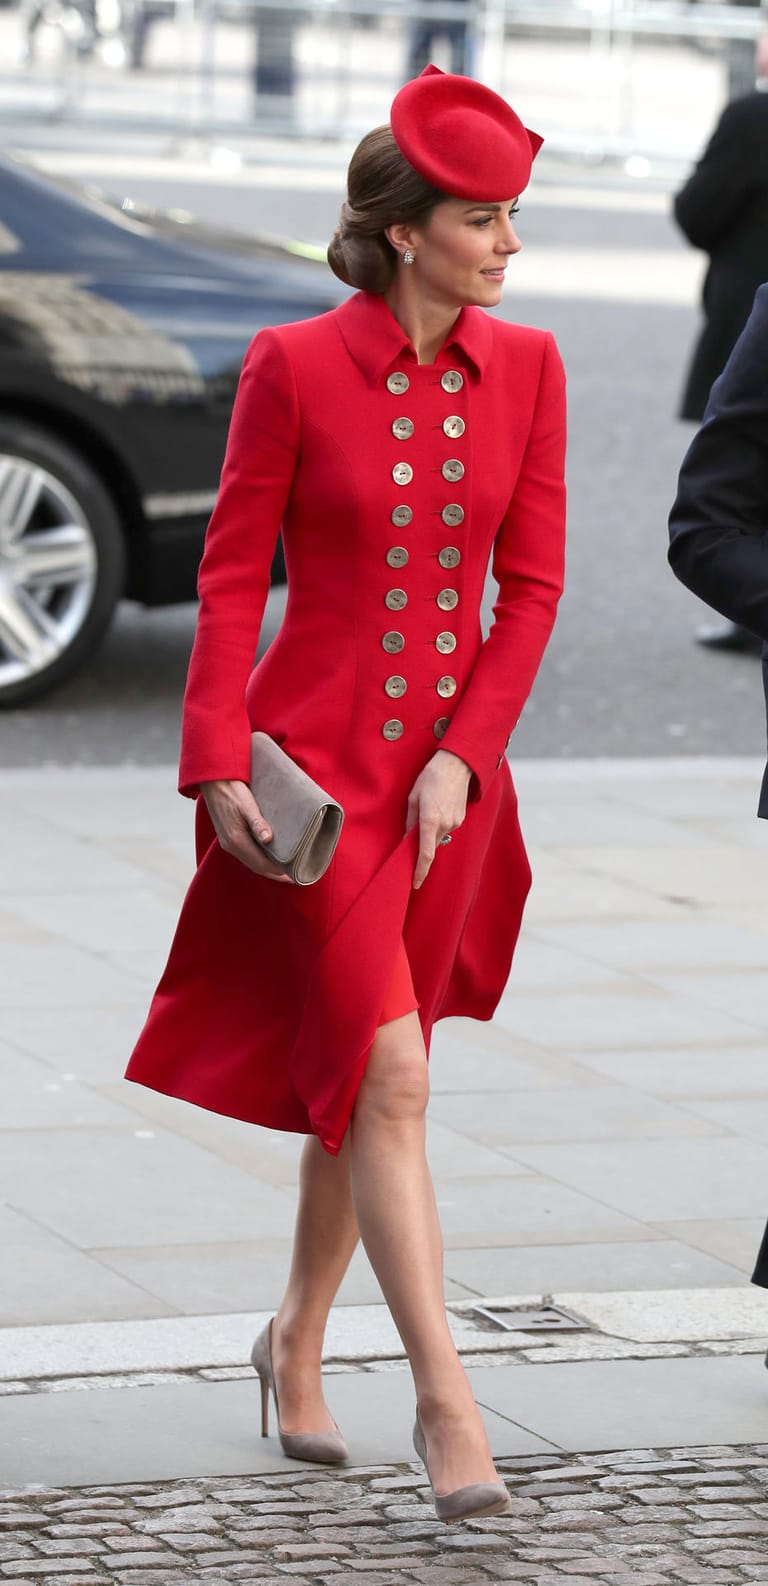 Perfekter Look: Kate erstrahlte in einem knalligen Rot.